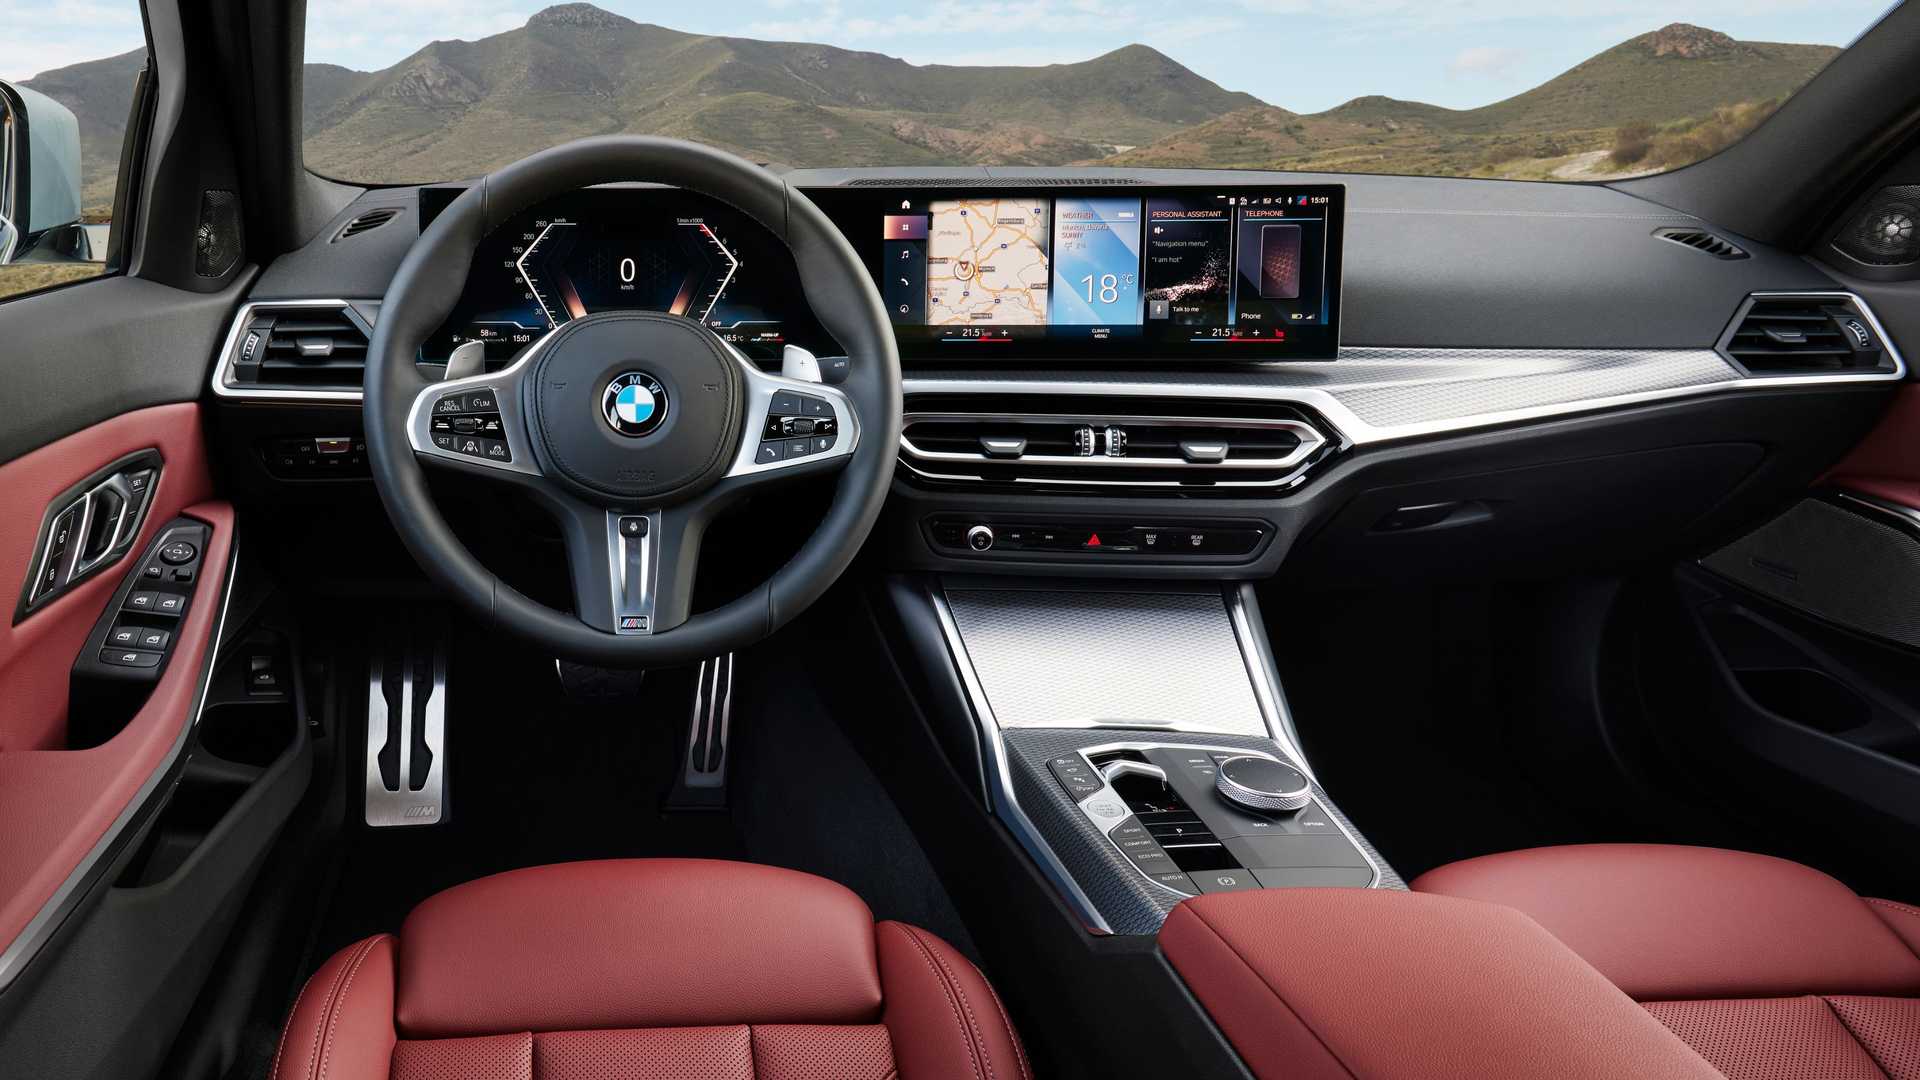 BMW 320i tabela fipe